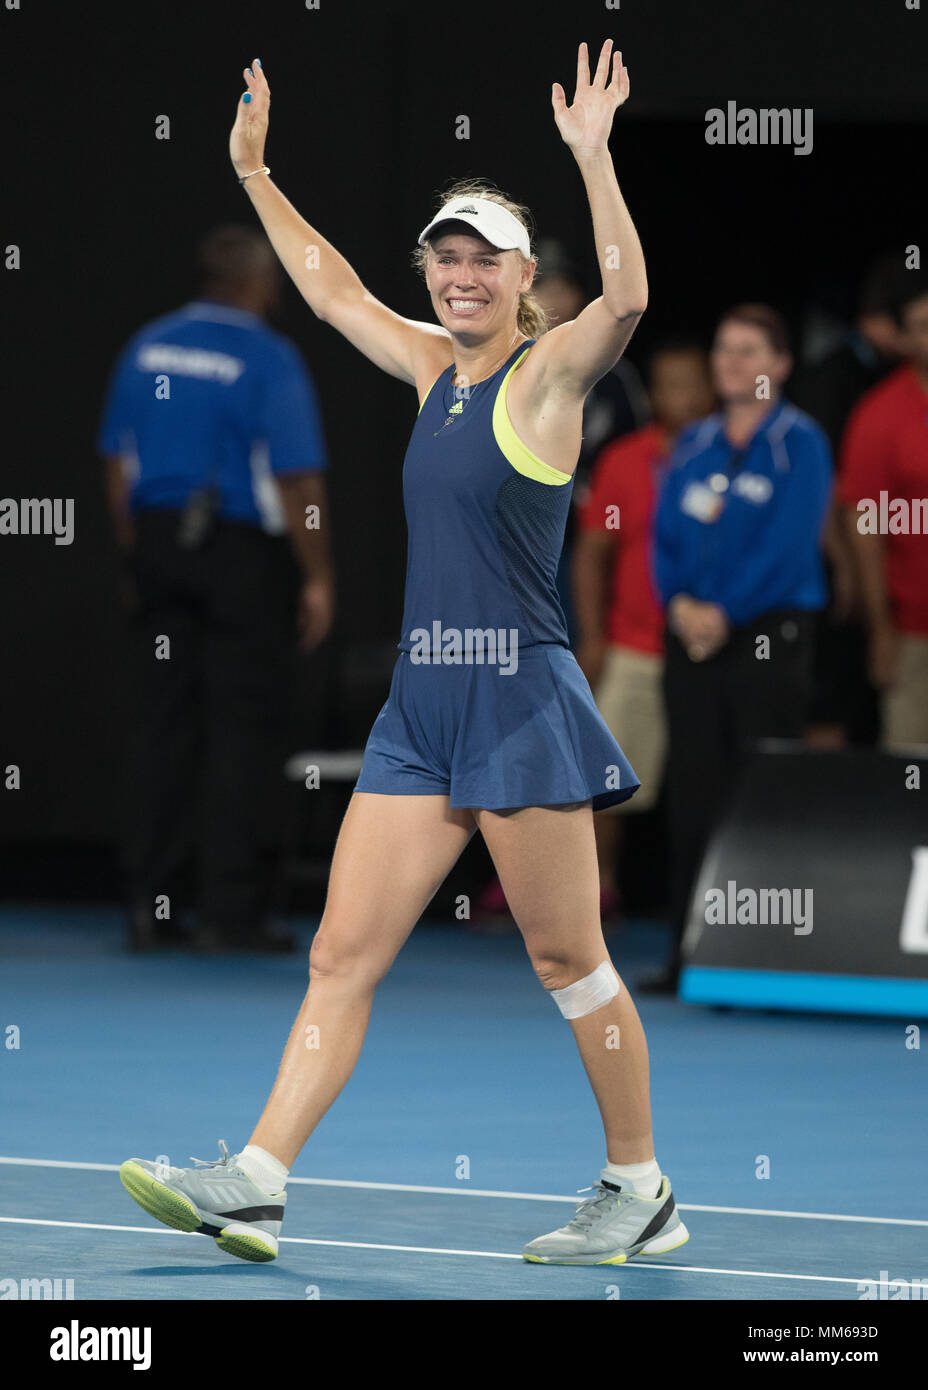 regnskyl at klemme Sind Danish tennis player Caroline Wozniacki celebrating during women's singles  match in Australian Open 2018 Tennis Tournament, Melbourne Park, Melbourne  Stock Photo - Alamy